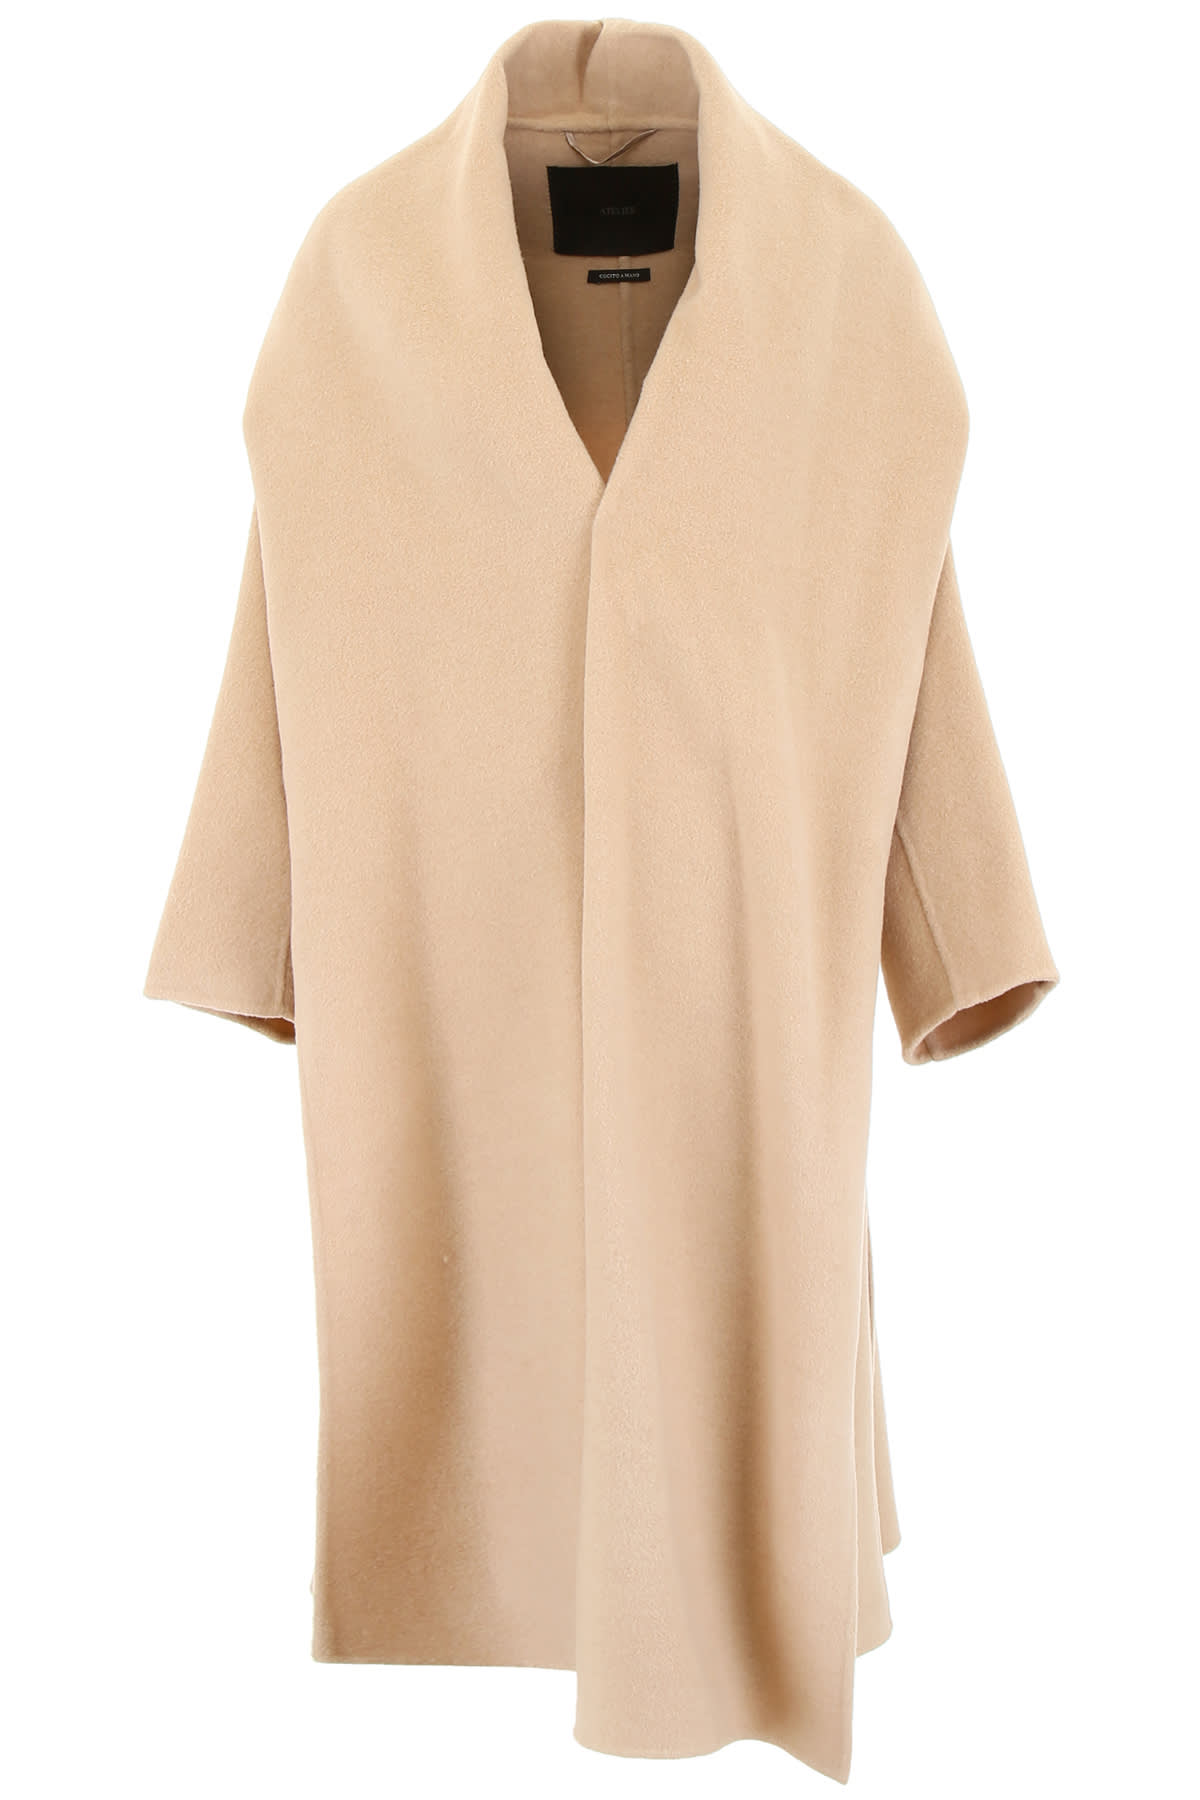 Max Mara Atelier Camel Wrap Coat | Coshio Online Shop